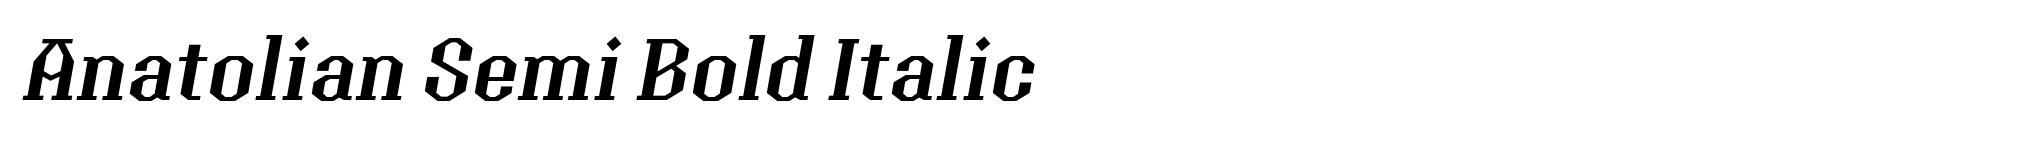 Anatolian Semi Bold Italic image